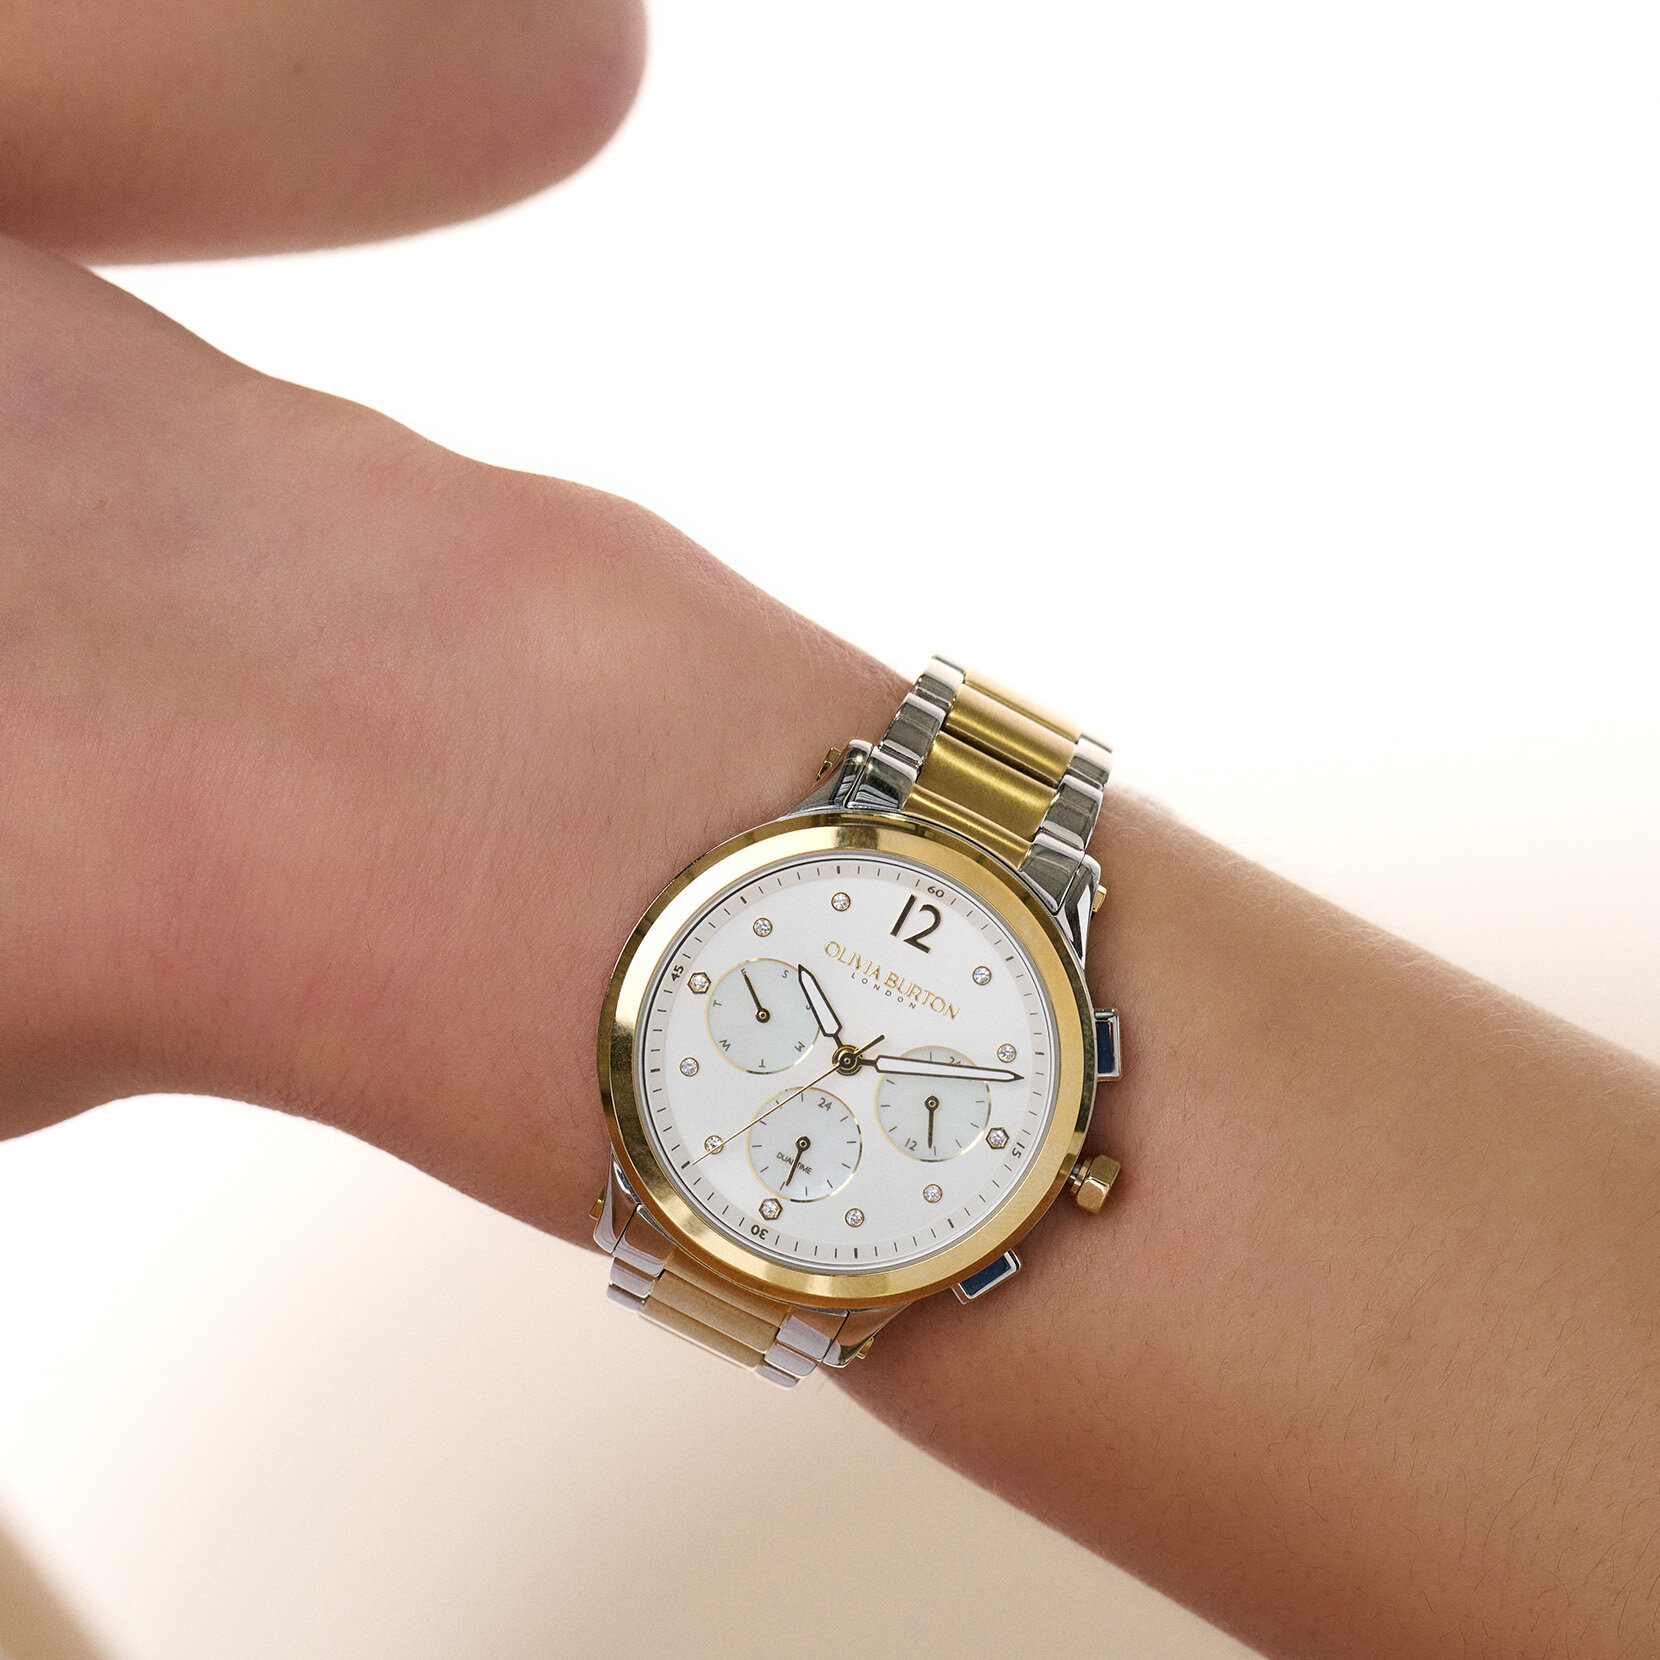 38mm Multi-Function Metallic White & Two Tone Bracelet Watch